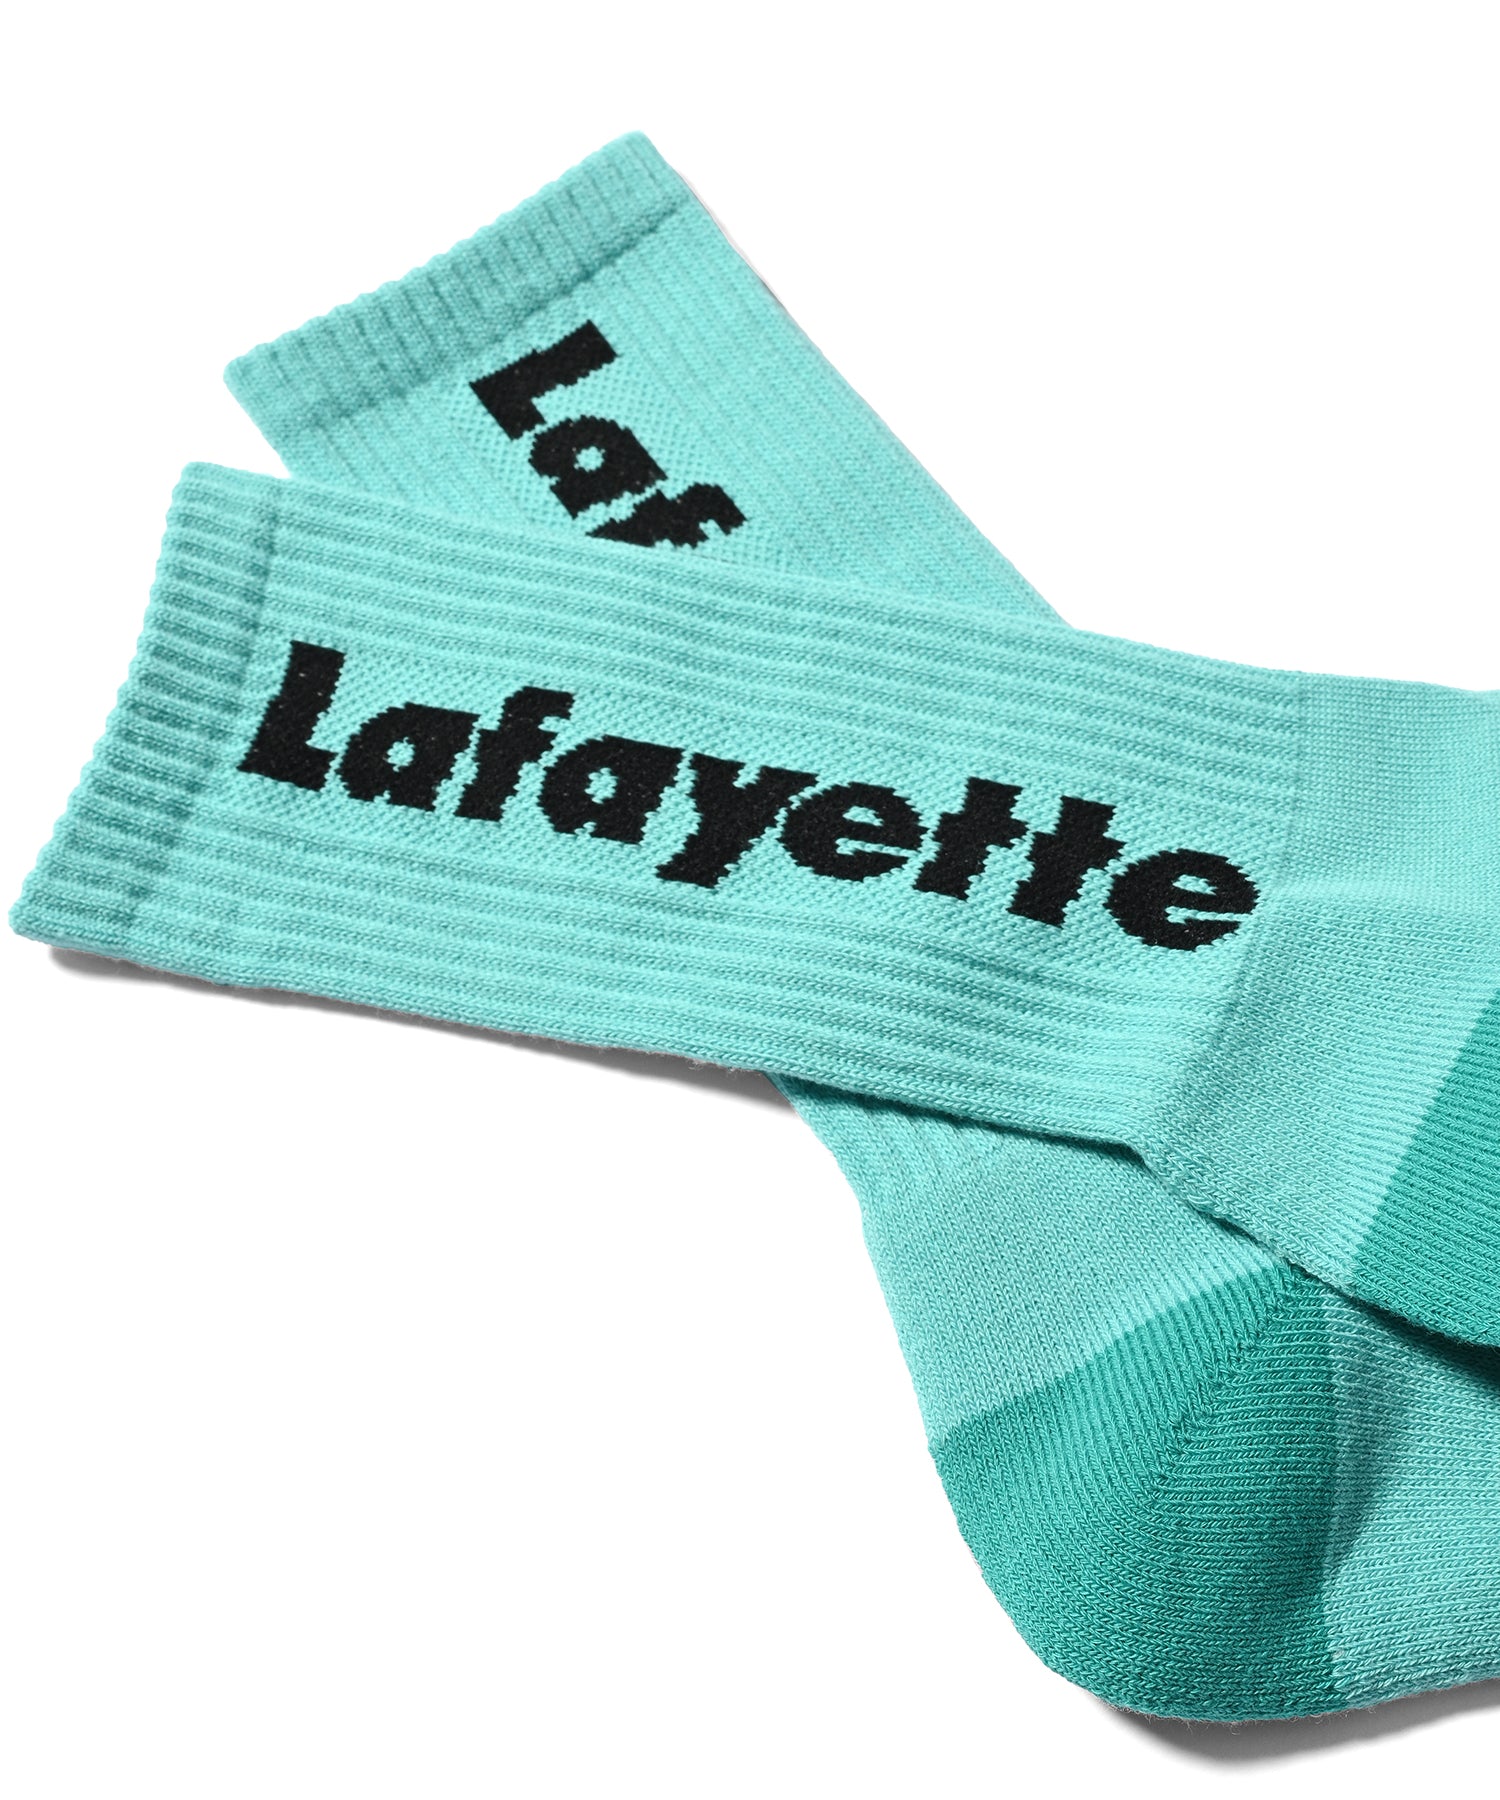 LFYT - LAFAYETTE LOGO CREW SOCKS LS242101